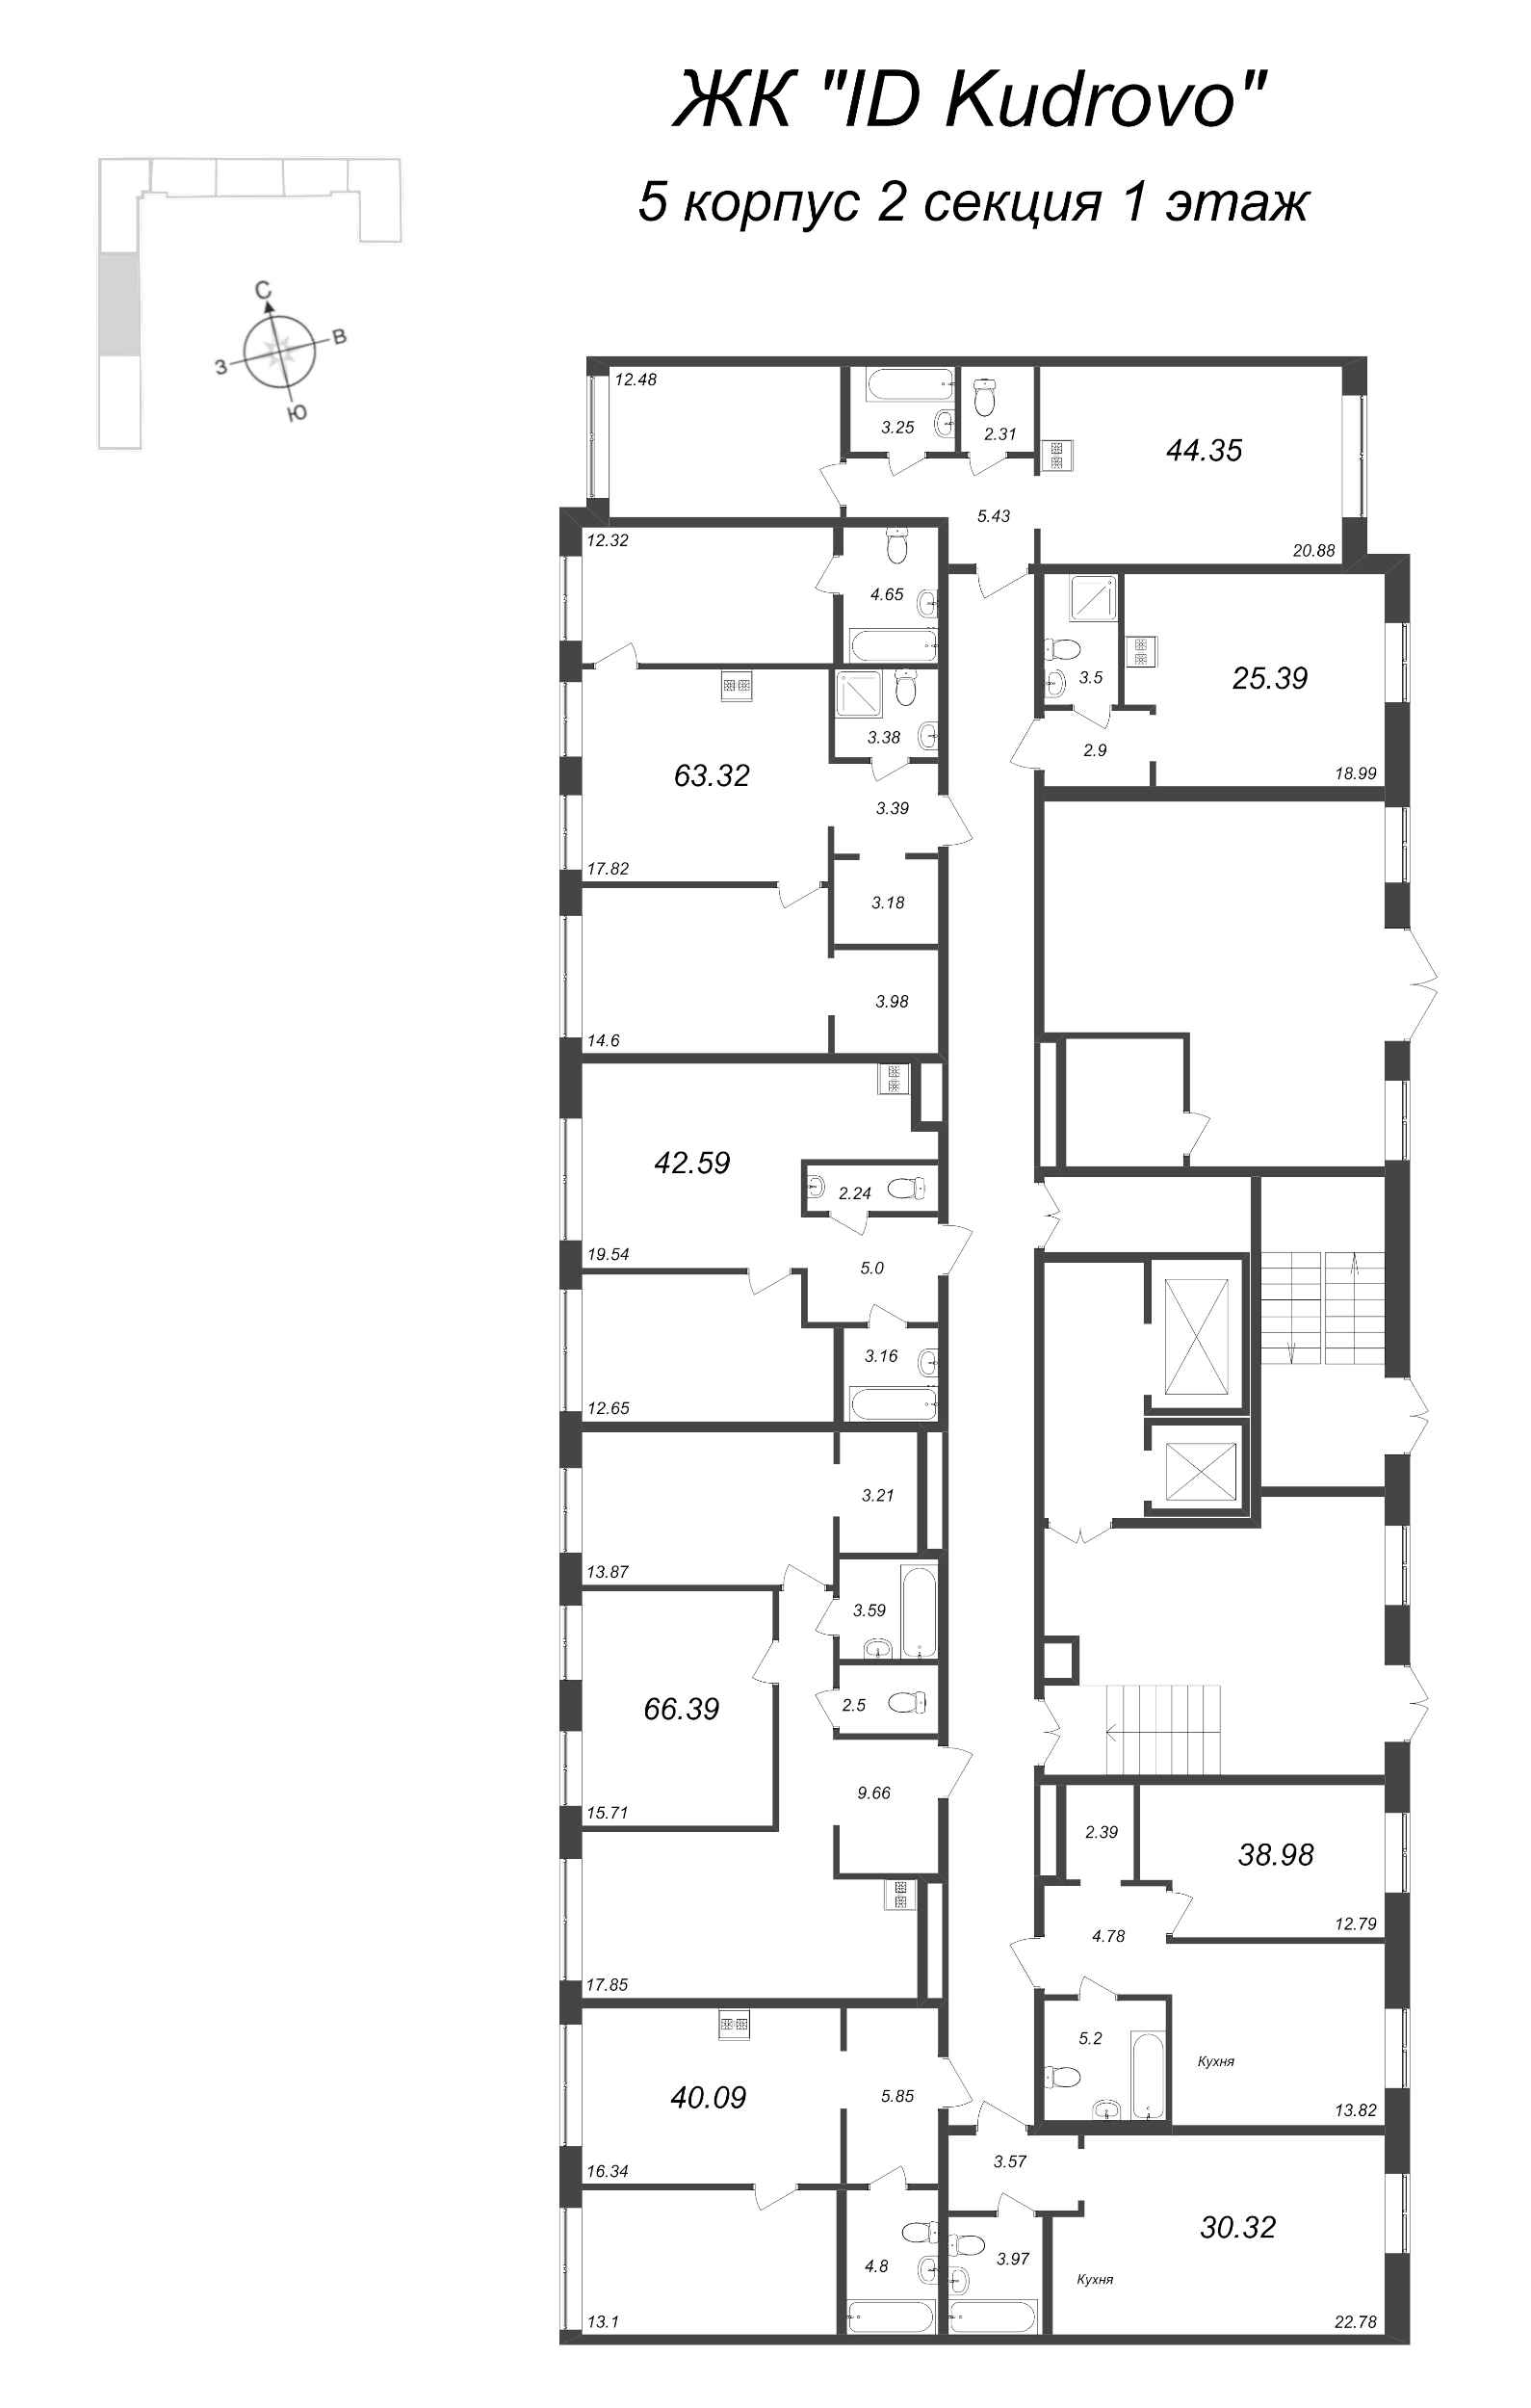 2-комнатная (Евро) квартира, 40.09 м² - планировка этажа